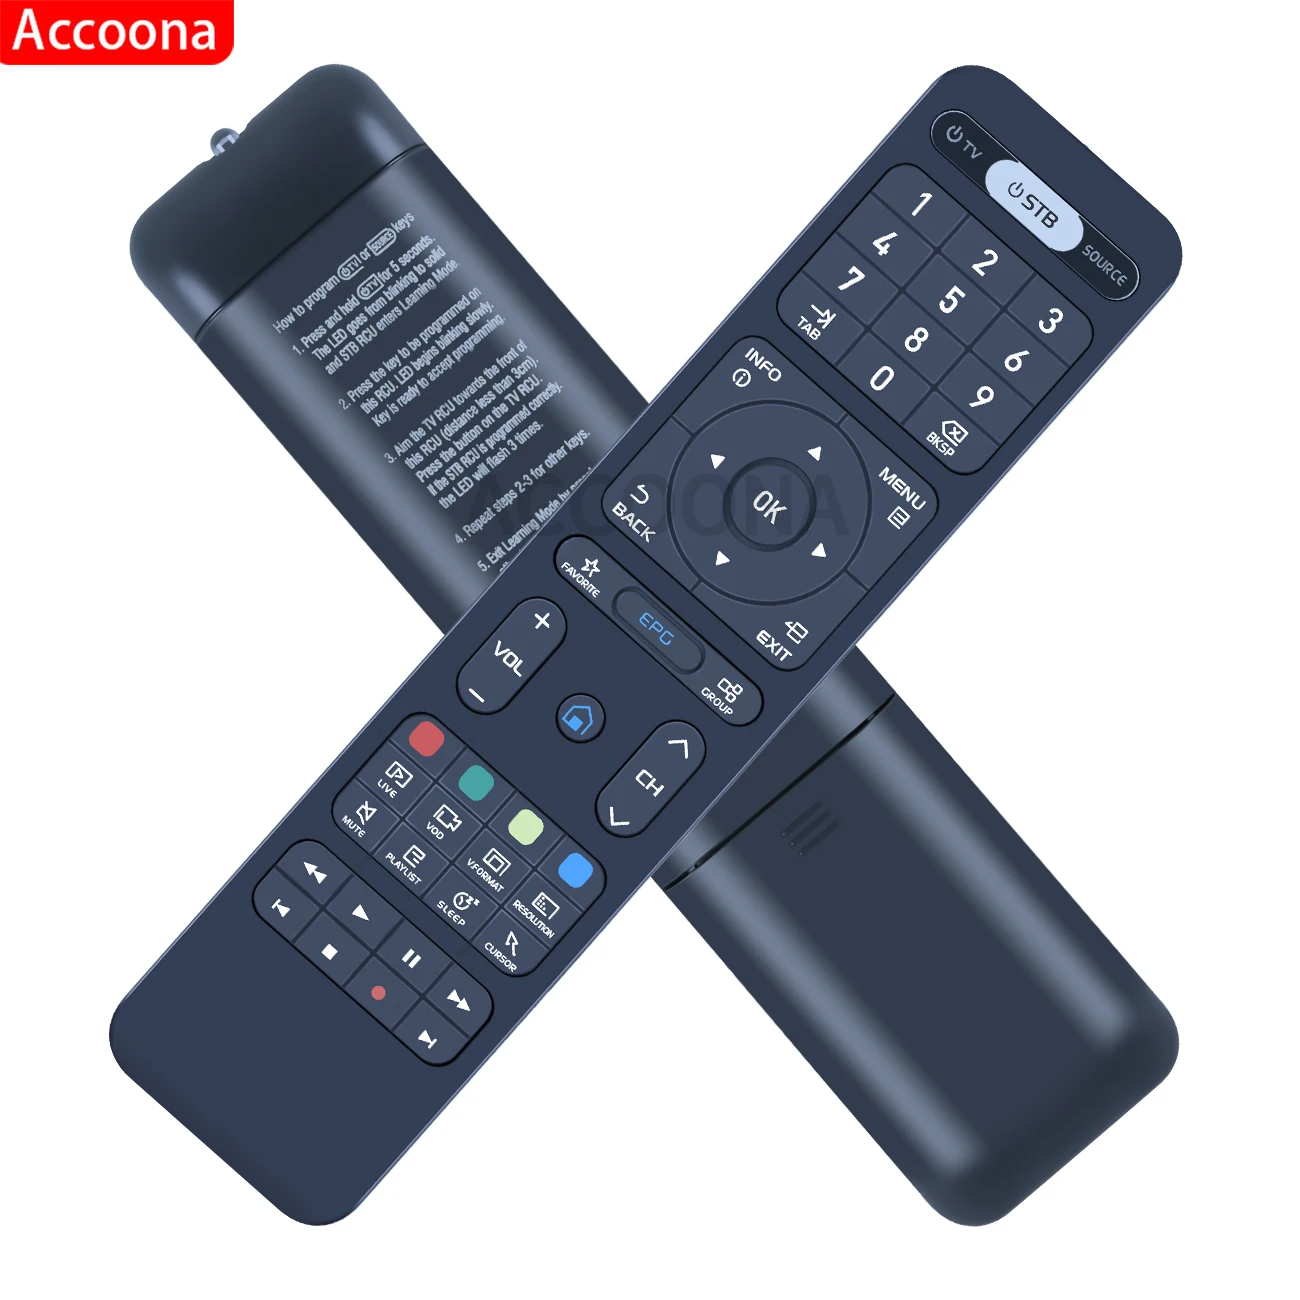 Formuler Z8 Pro 5G + IR Remote Control + Extra Premium Control Remote